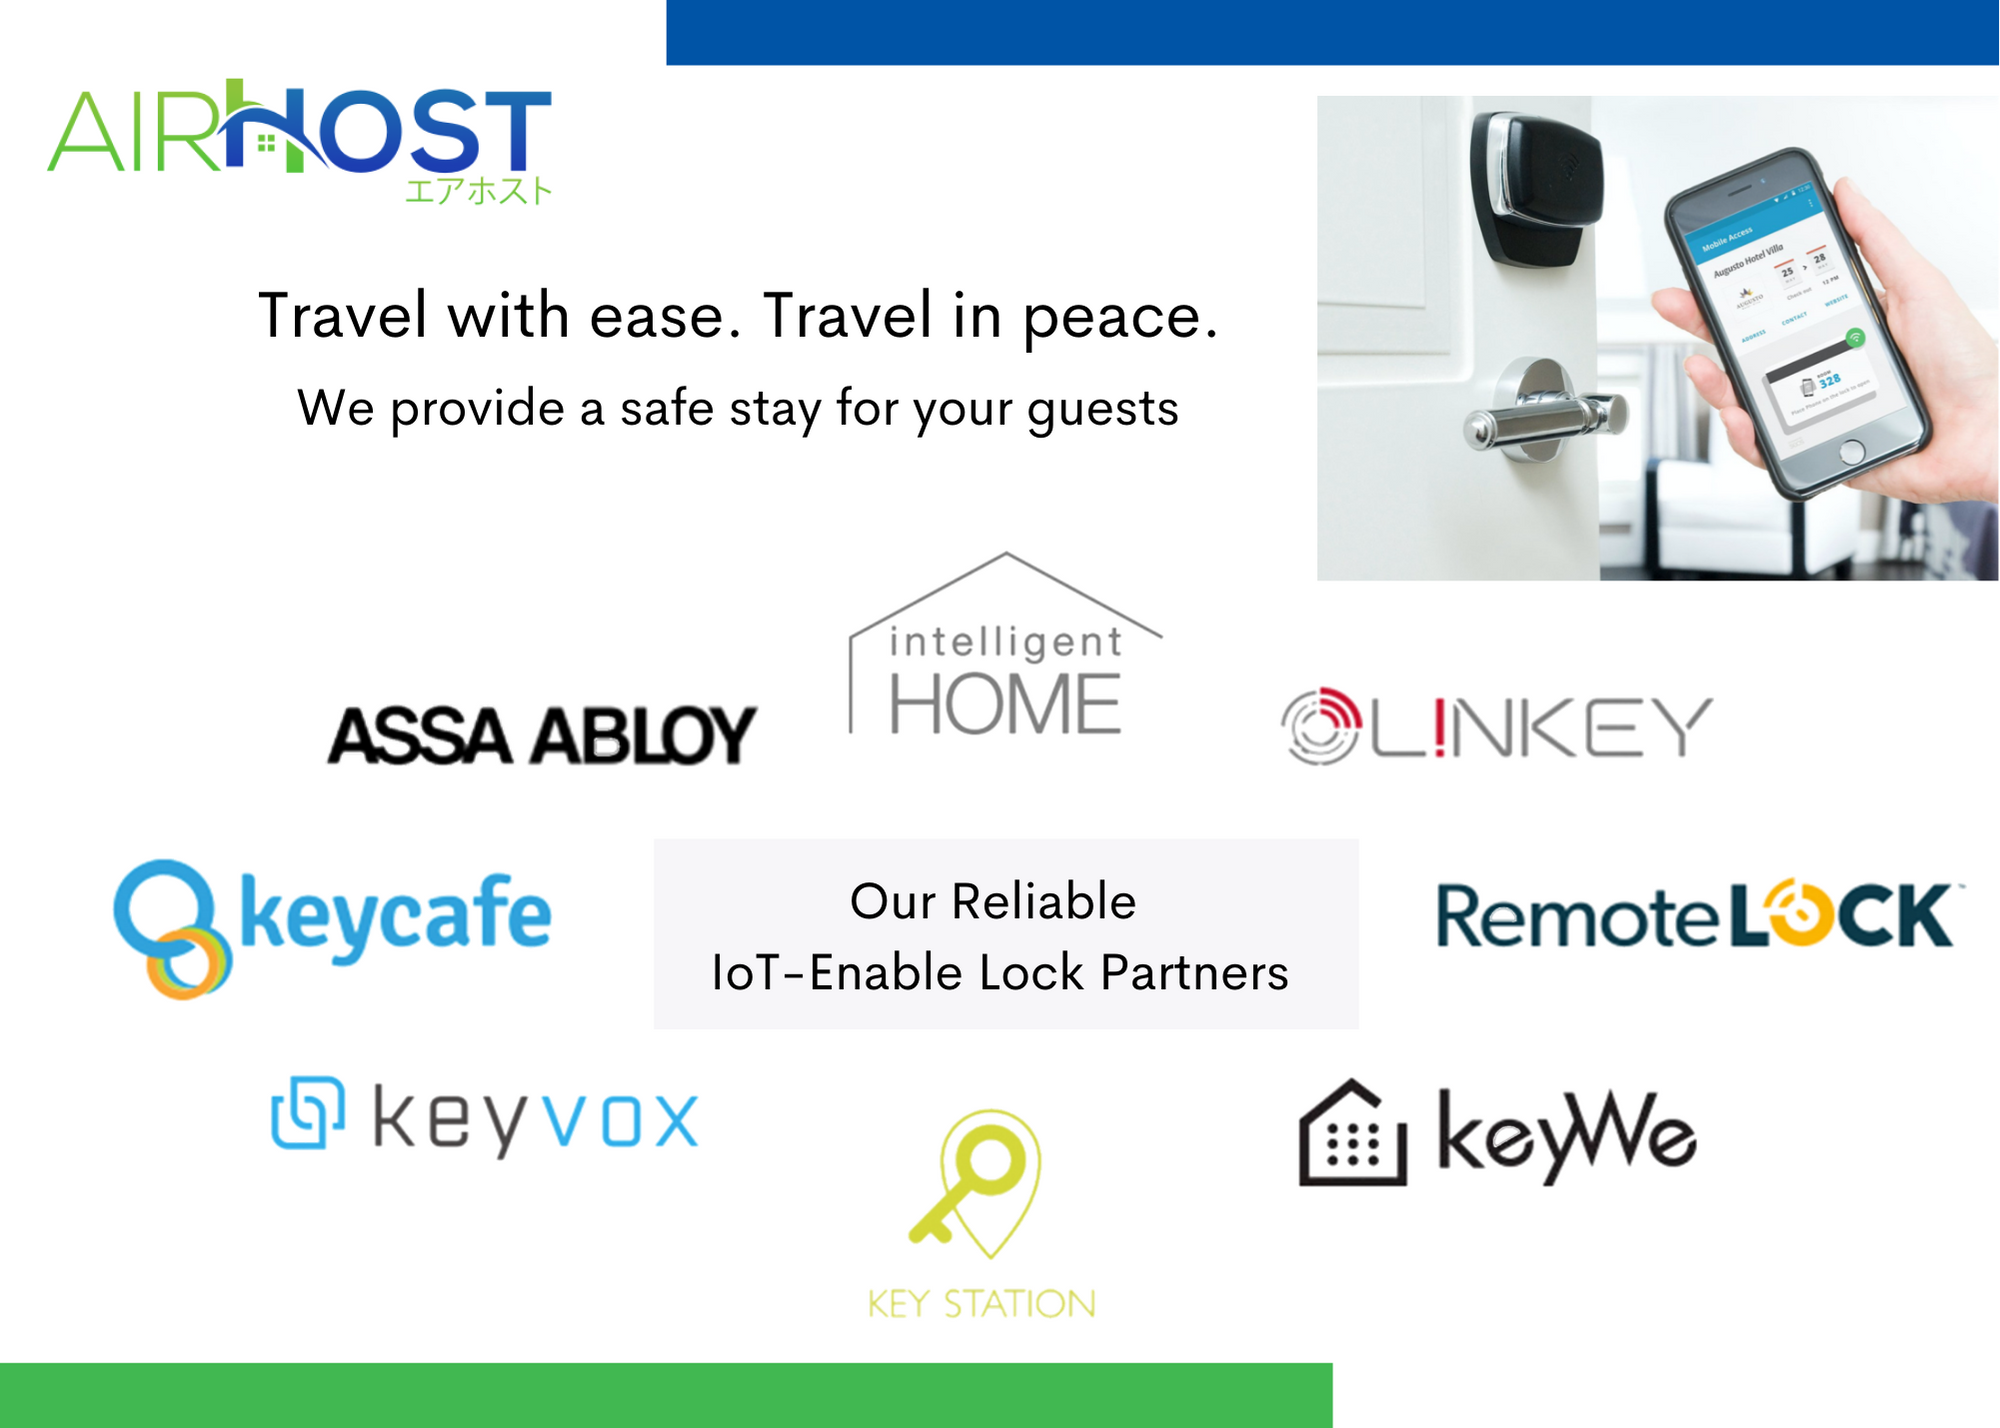 AirHost's IoT-Enable Lock Partners